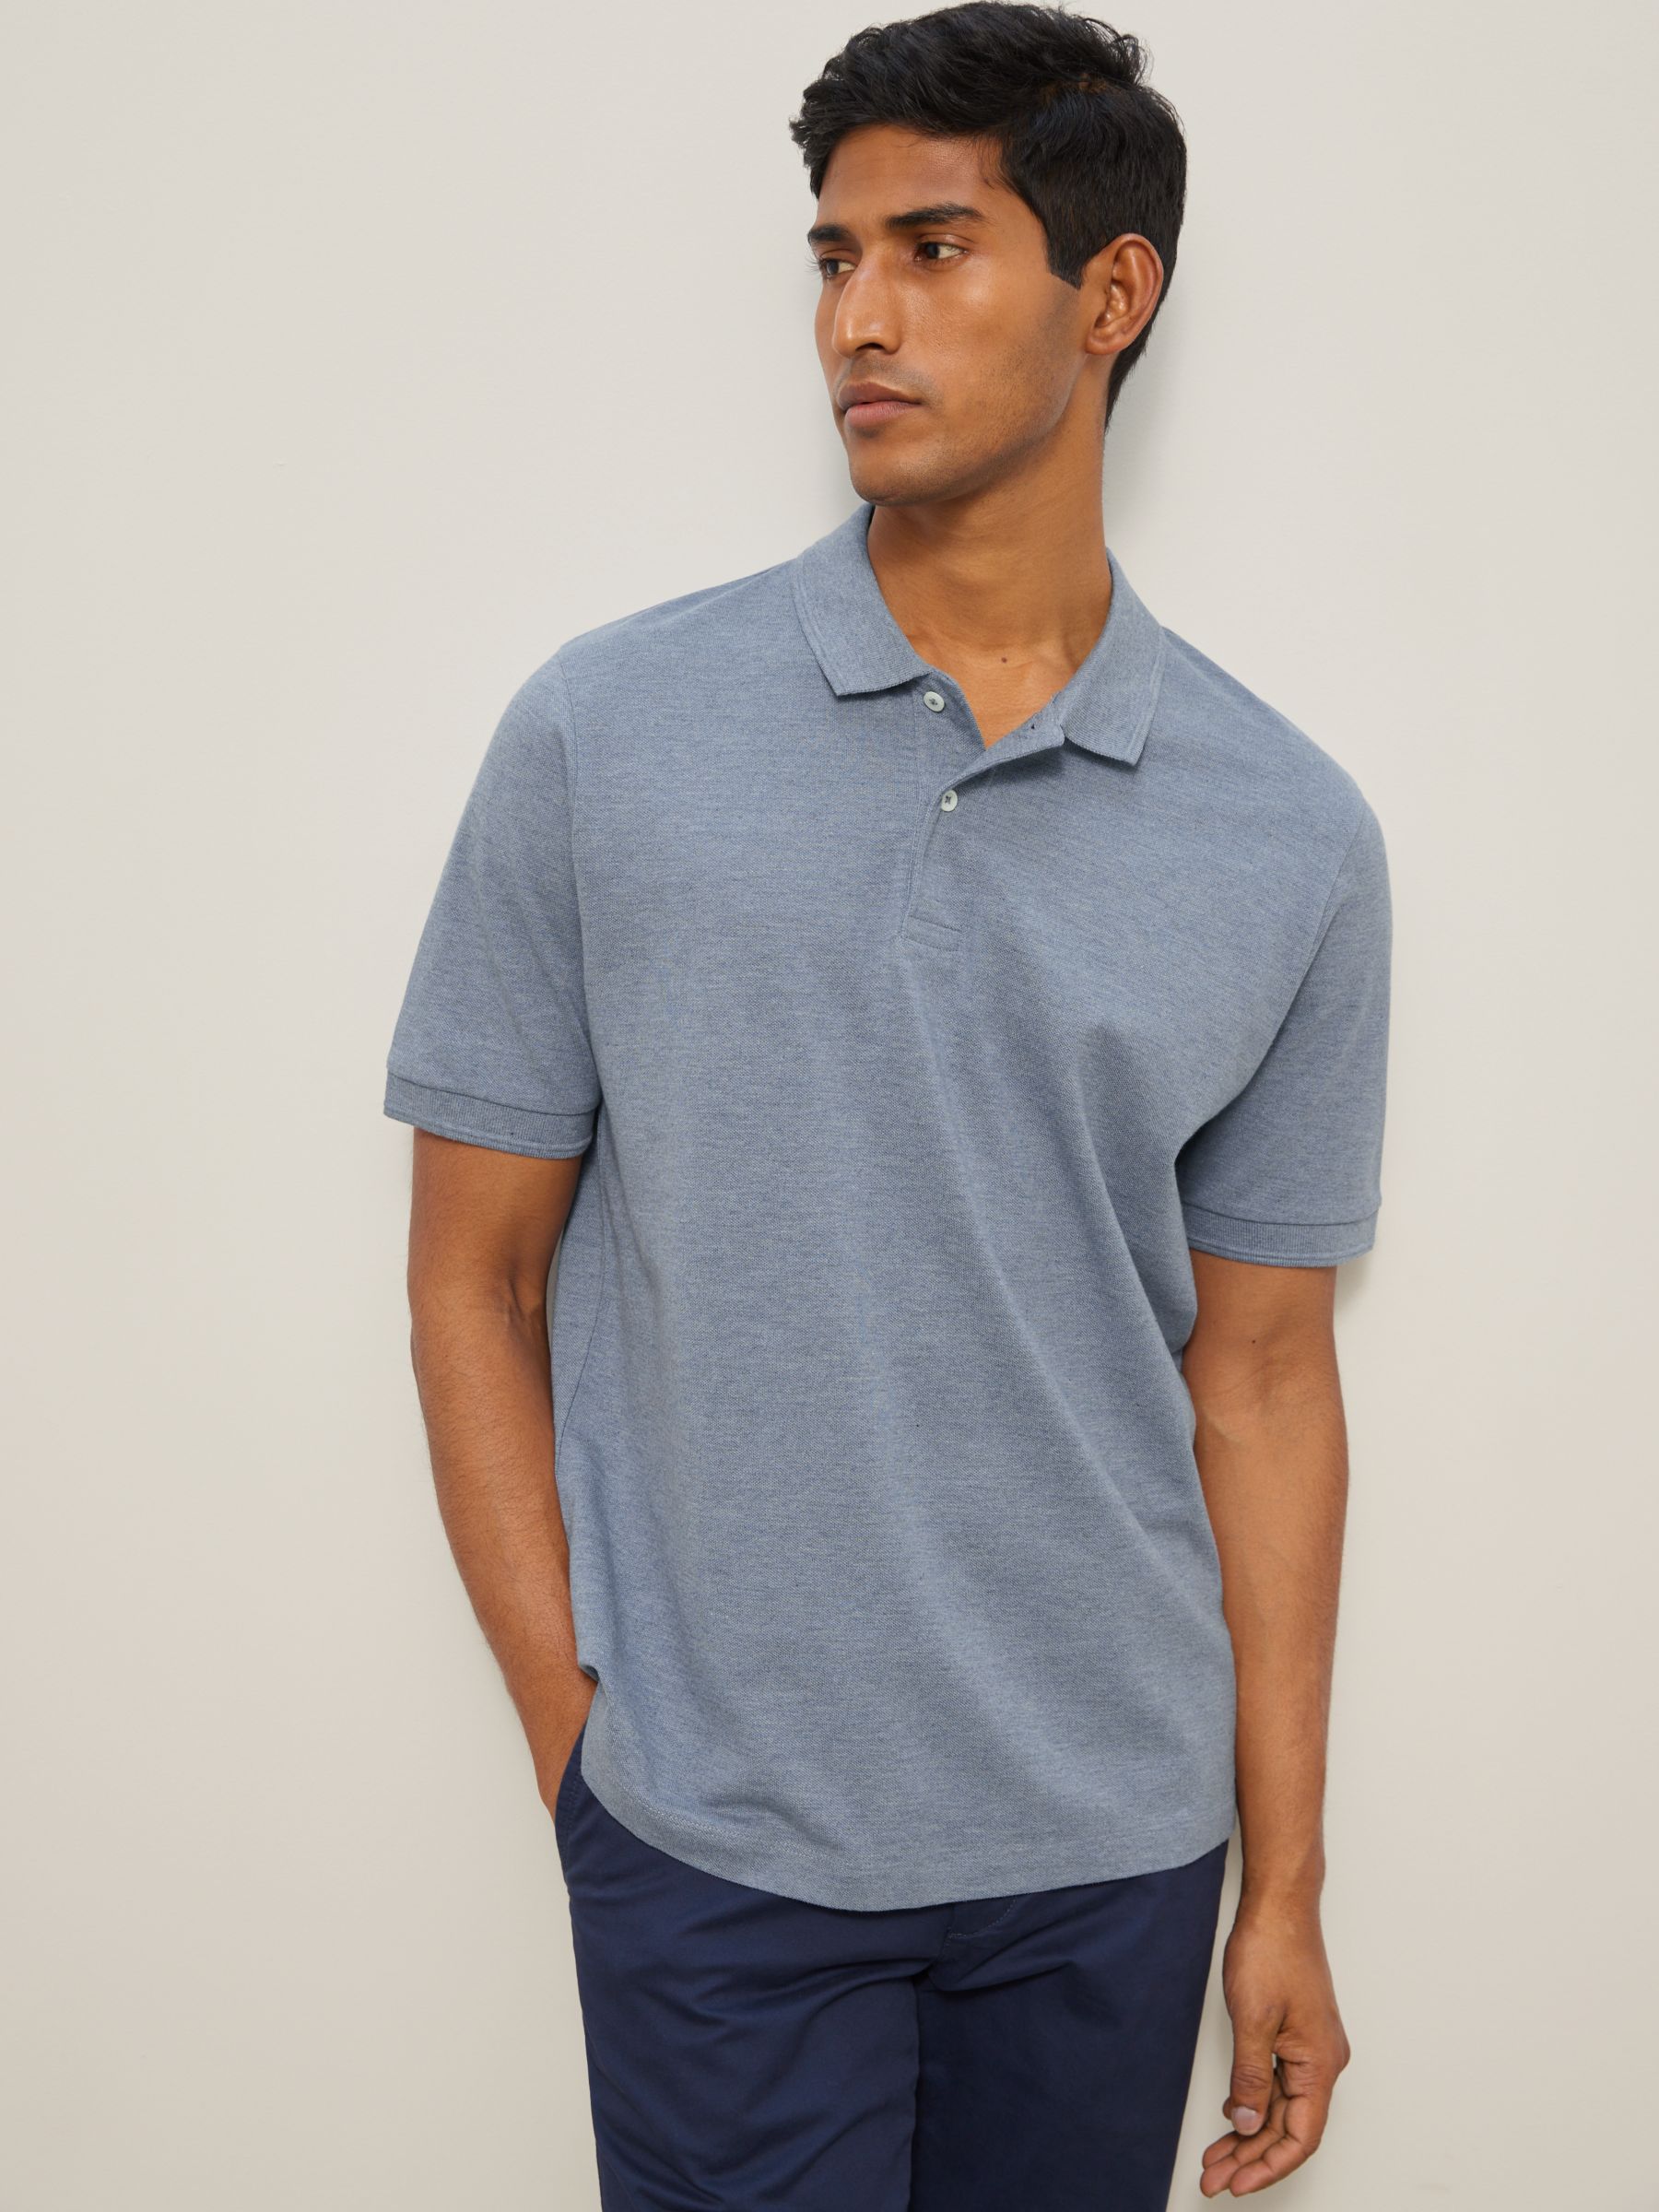 John Lewis Supima Cotton Jersey Polo Shirt, Denim Melange, S